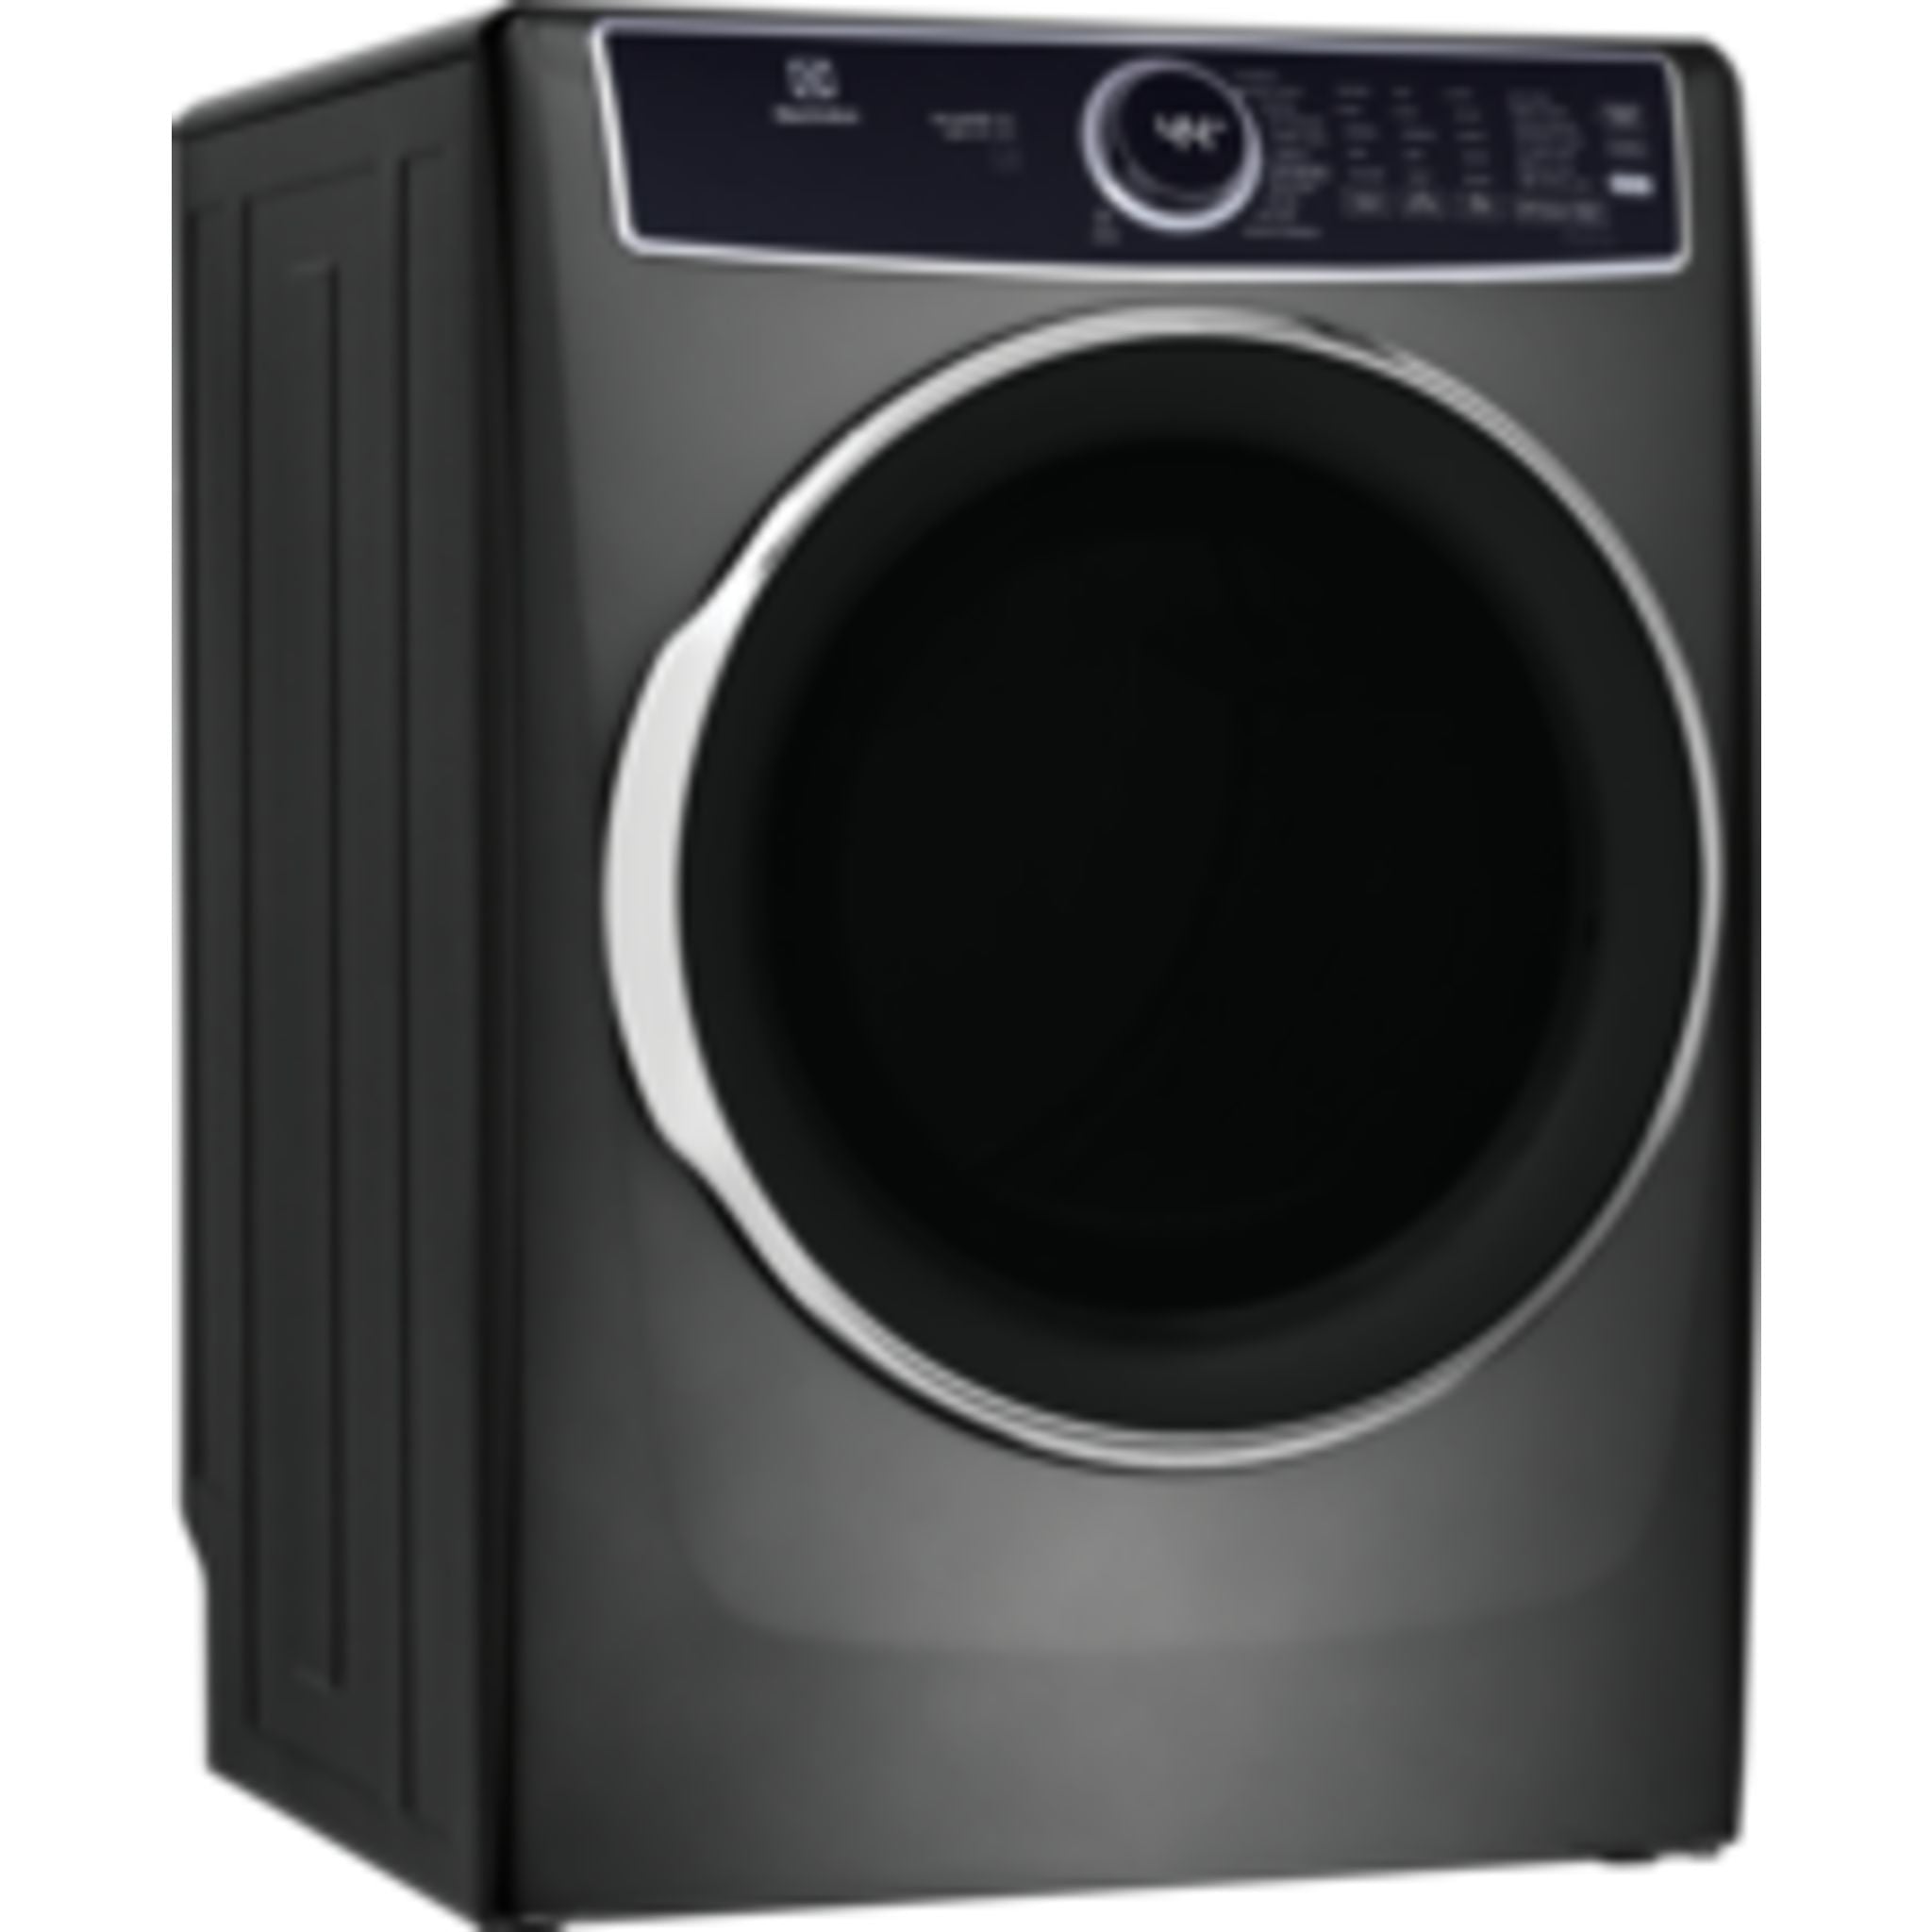 Electrolux Home Products, Electrolux Dryer (ELFE763CAT) - Titanium